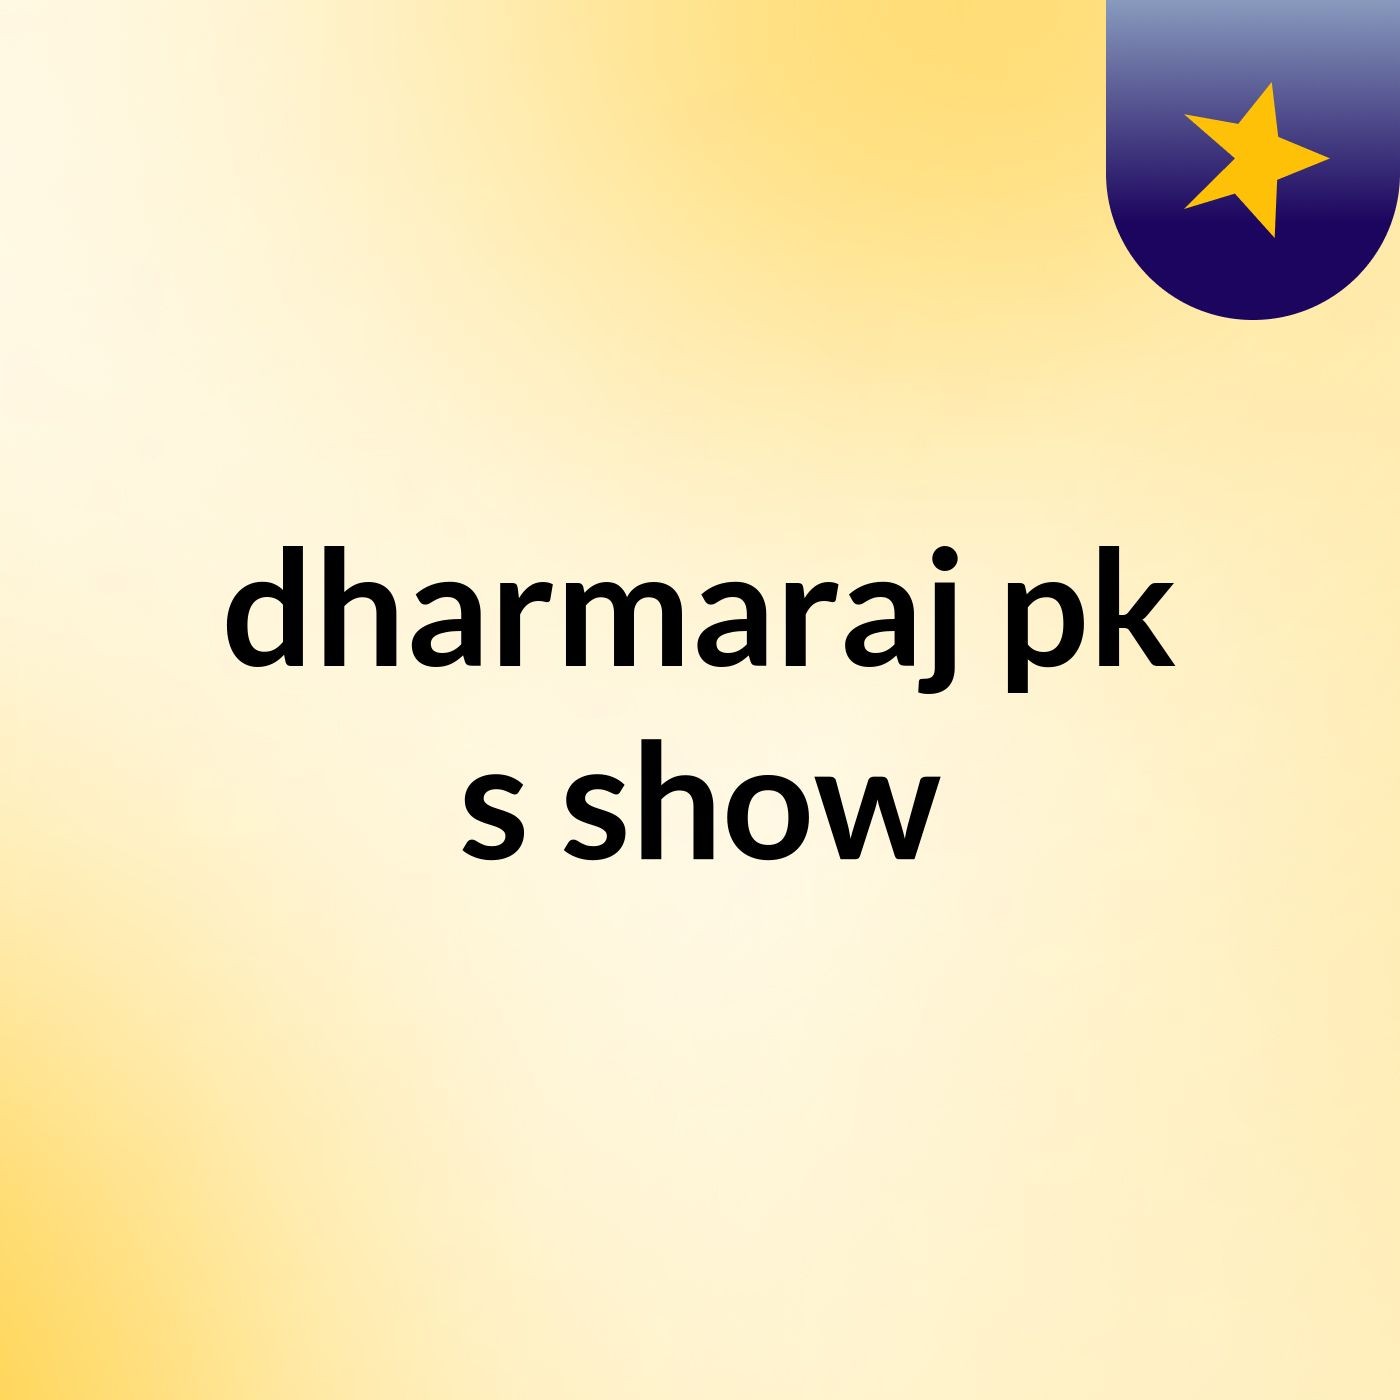 Episode 3 - dharmaraj pk's show